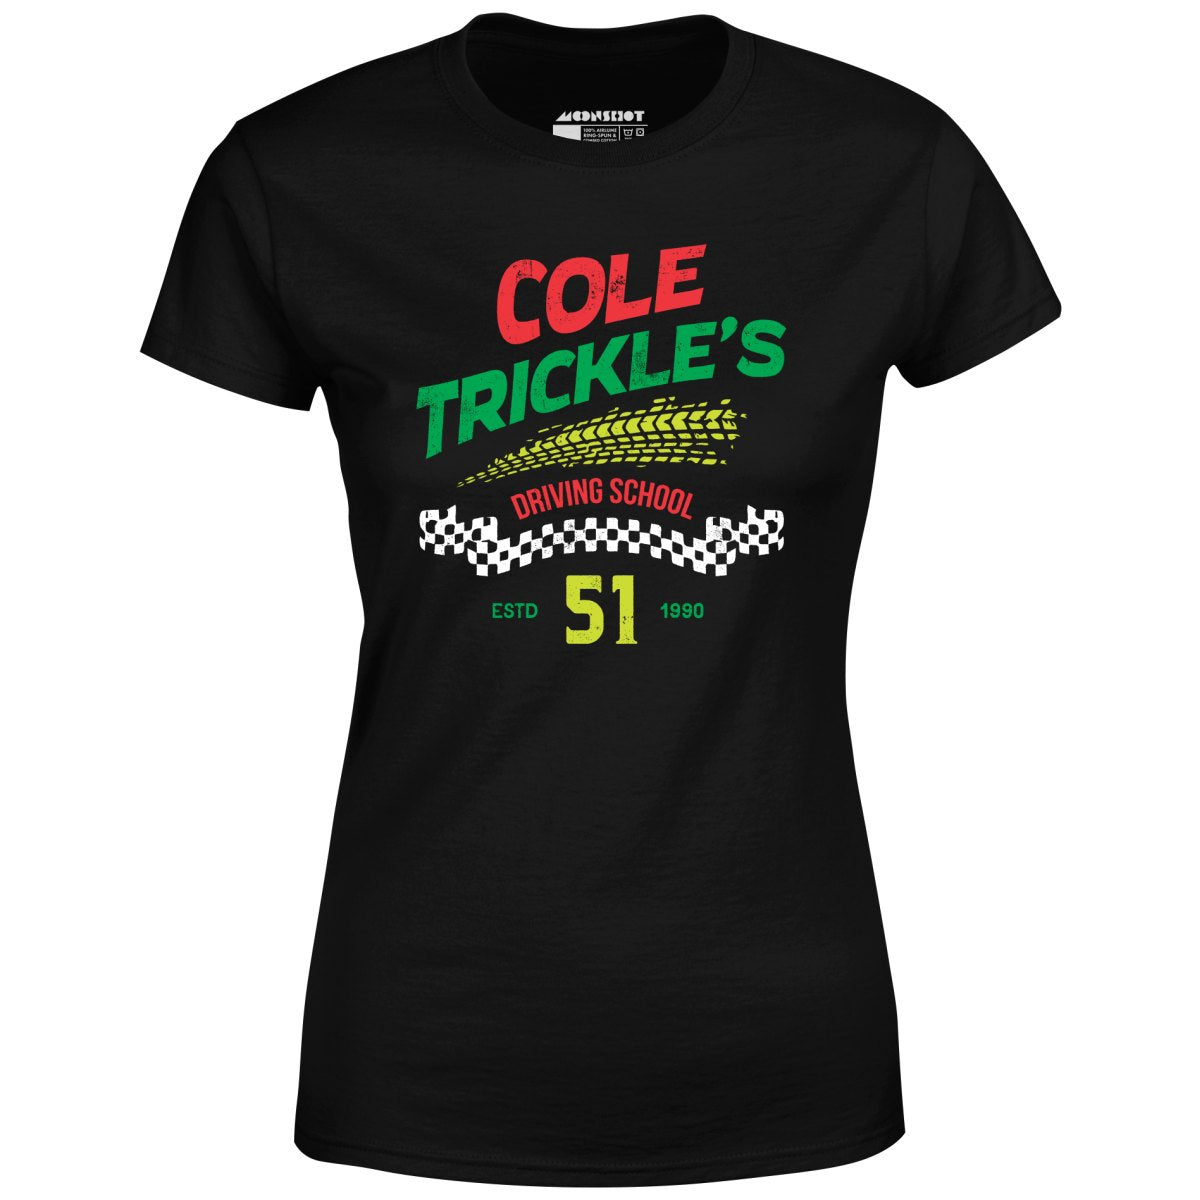 Cole Trickle's Driving School - Women's T-Shirt